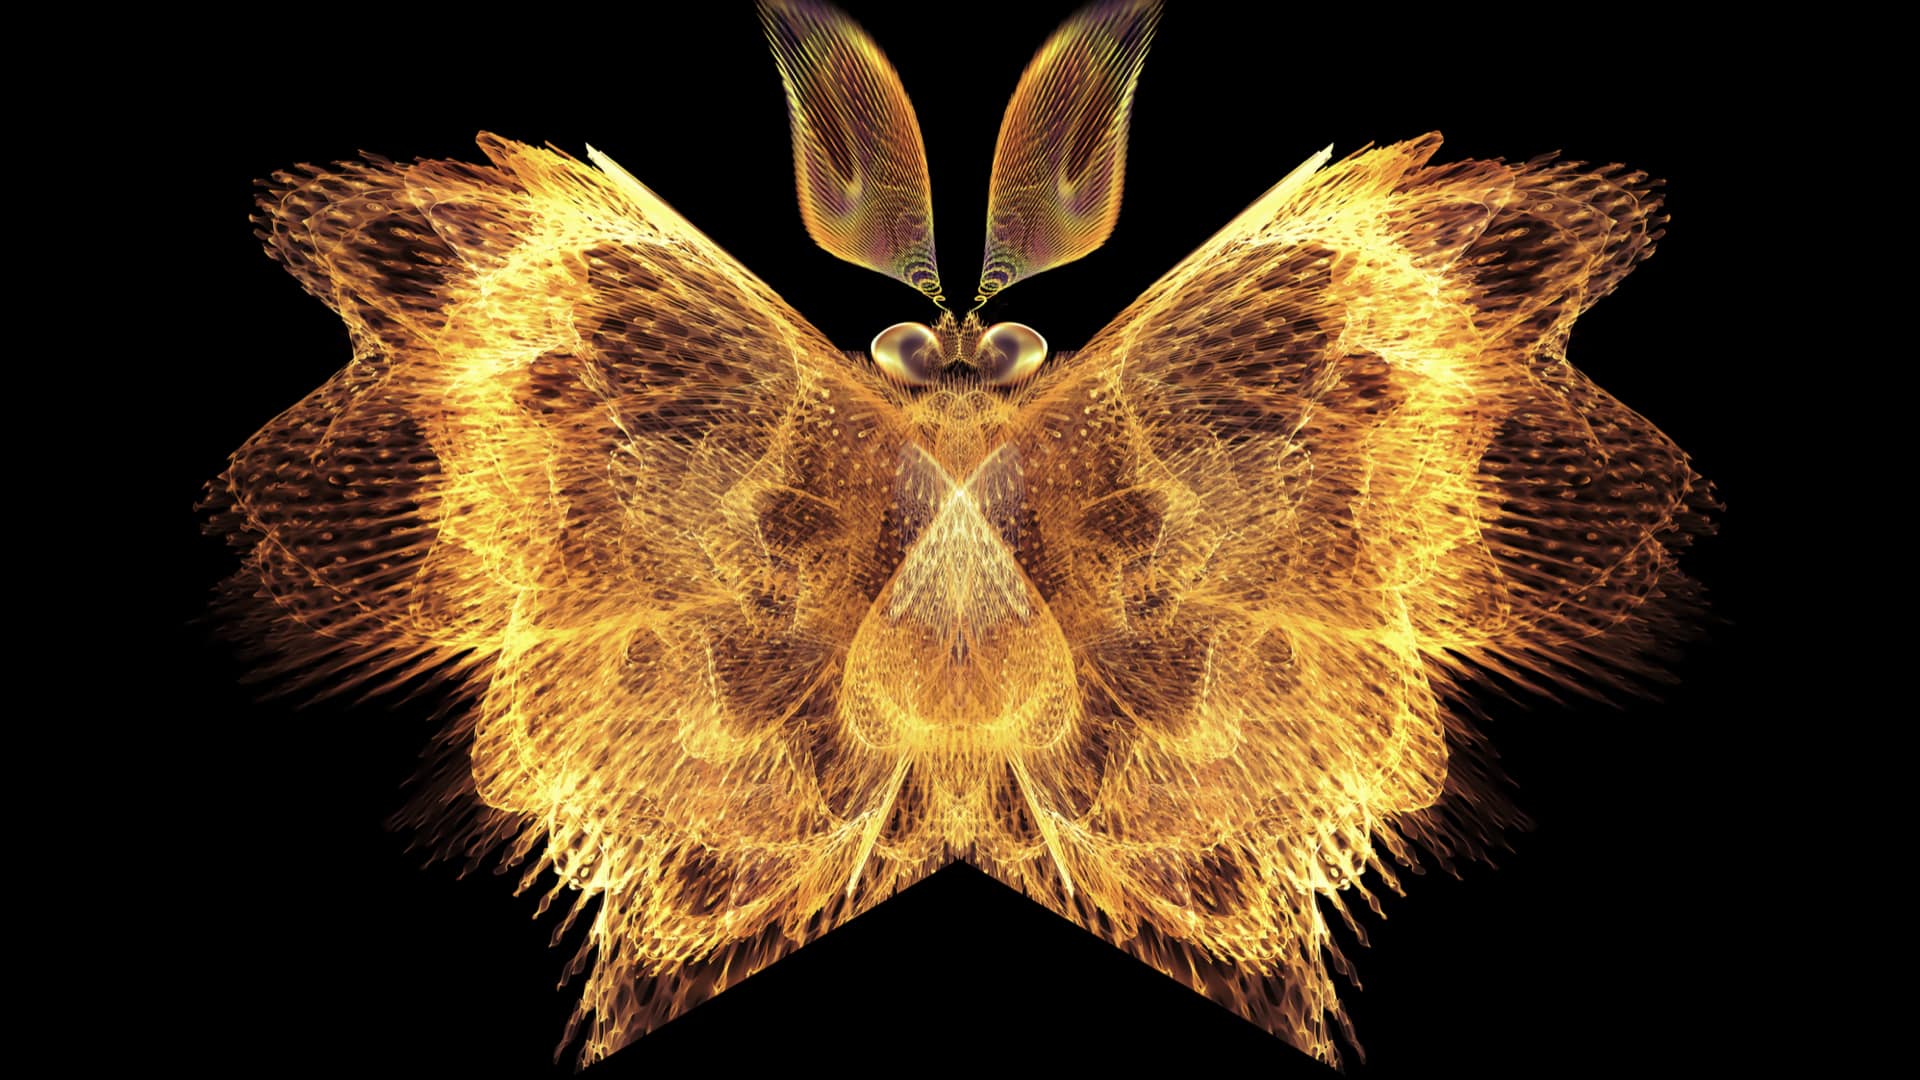 The Golden Butterfly Portfolio